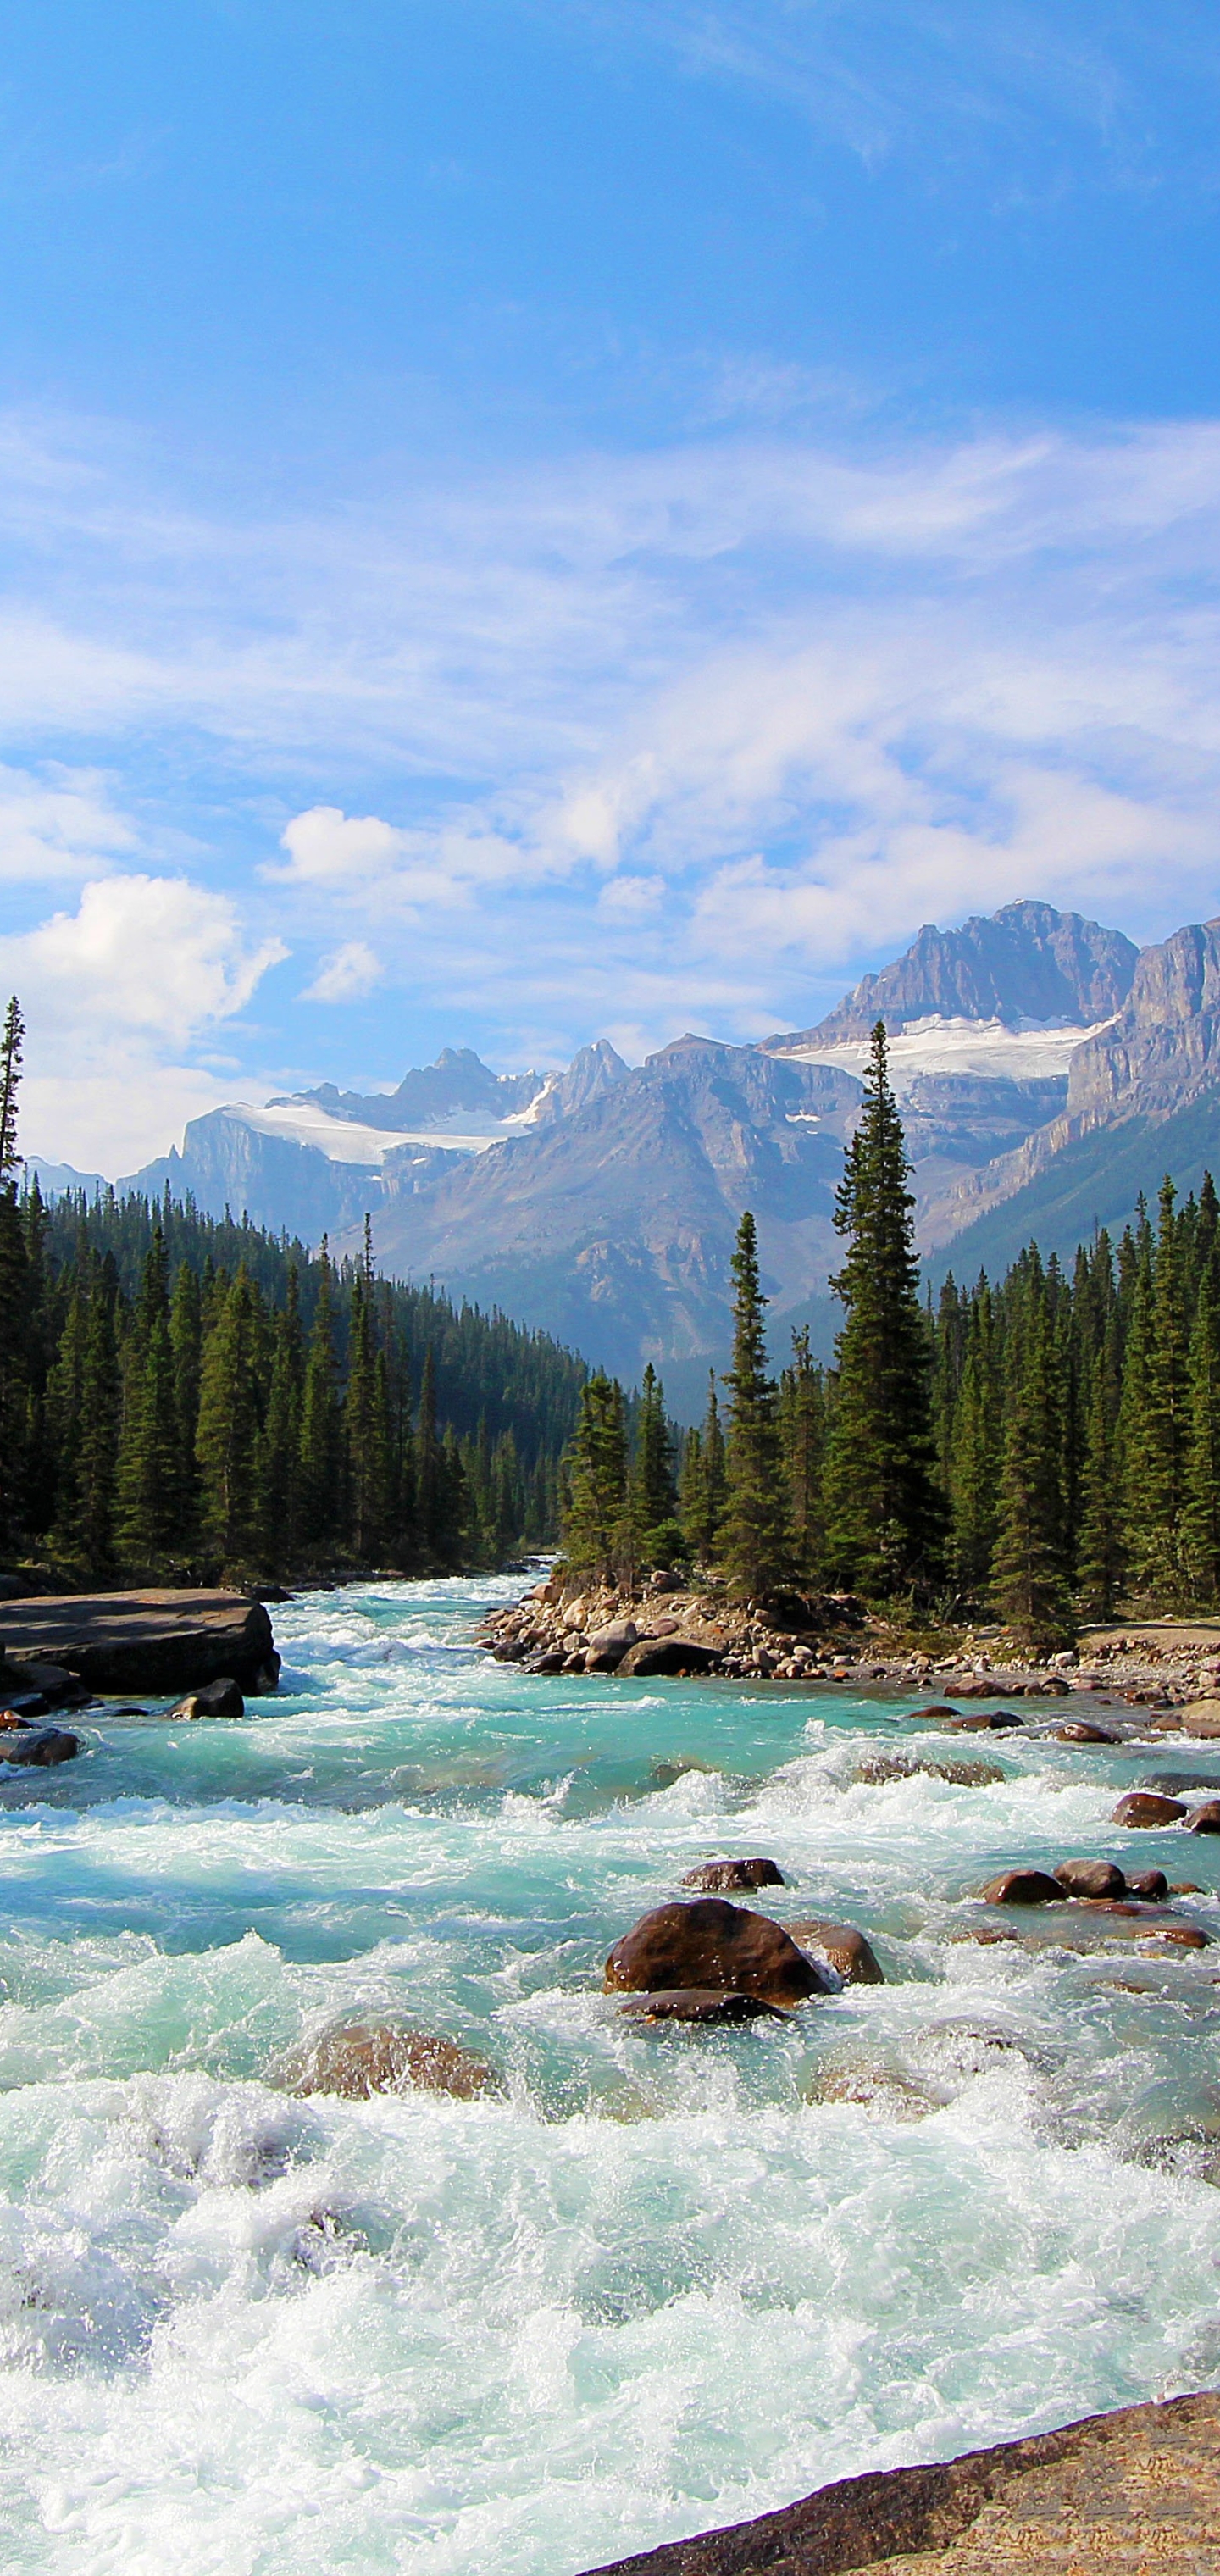 Handy-Wallpaper Landschaft, Kanada, Wald, Fluss, Banff Nationalpark, Erde/natur kostenlos herunterladen.